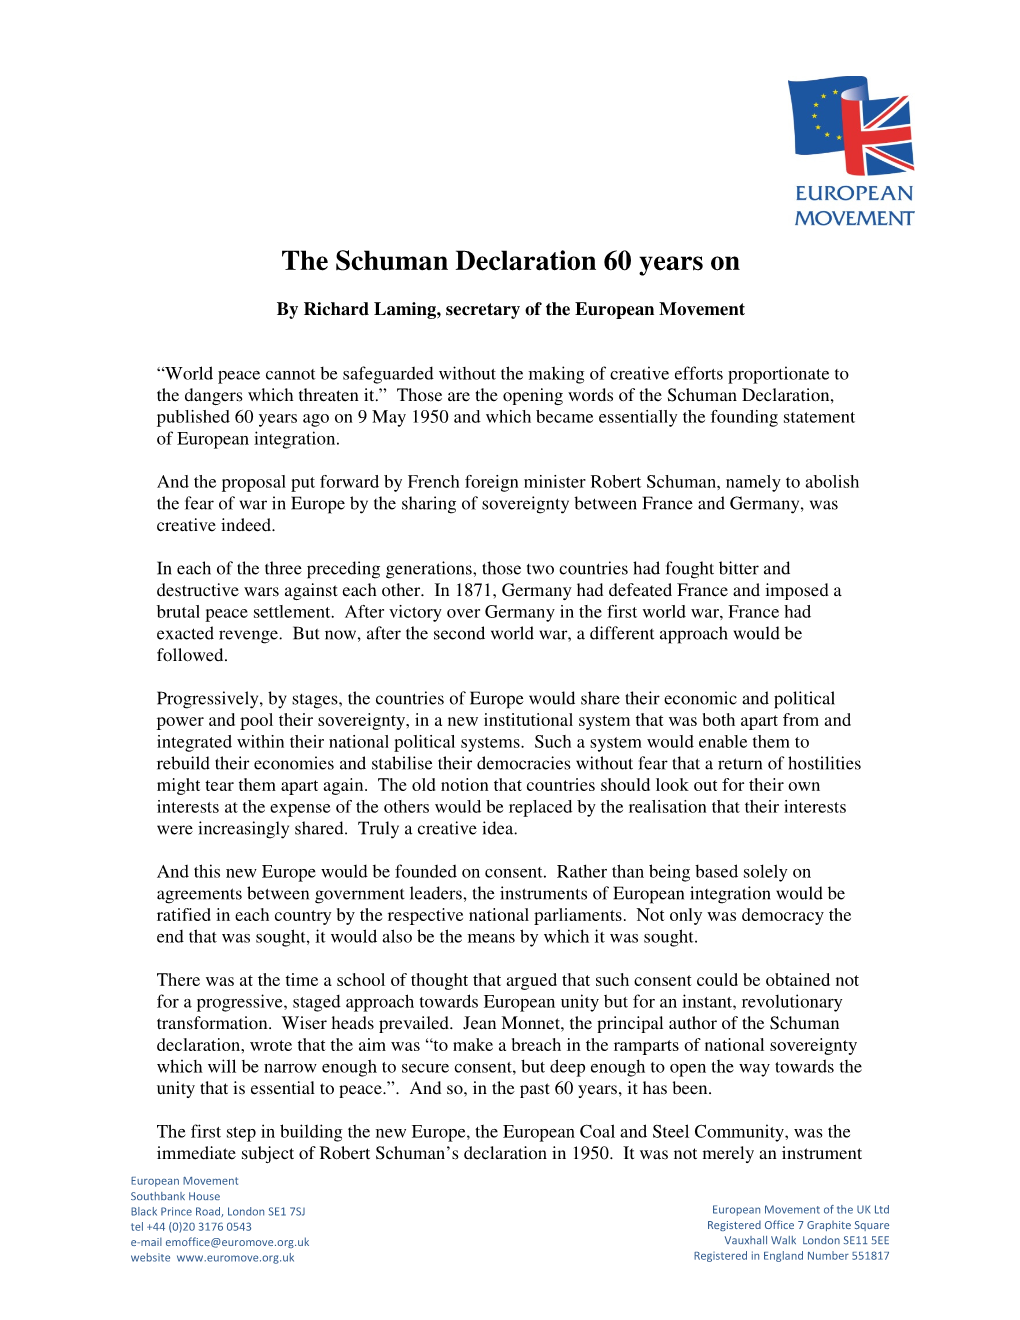 The Schuman Declaration 60 Years On